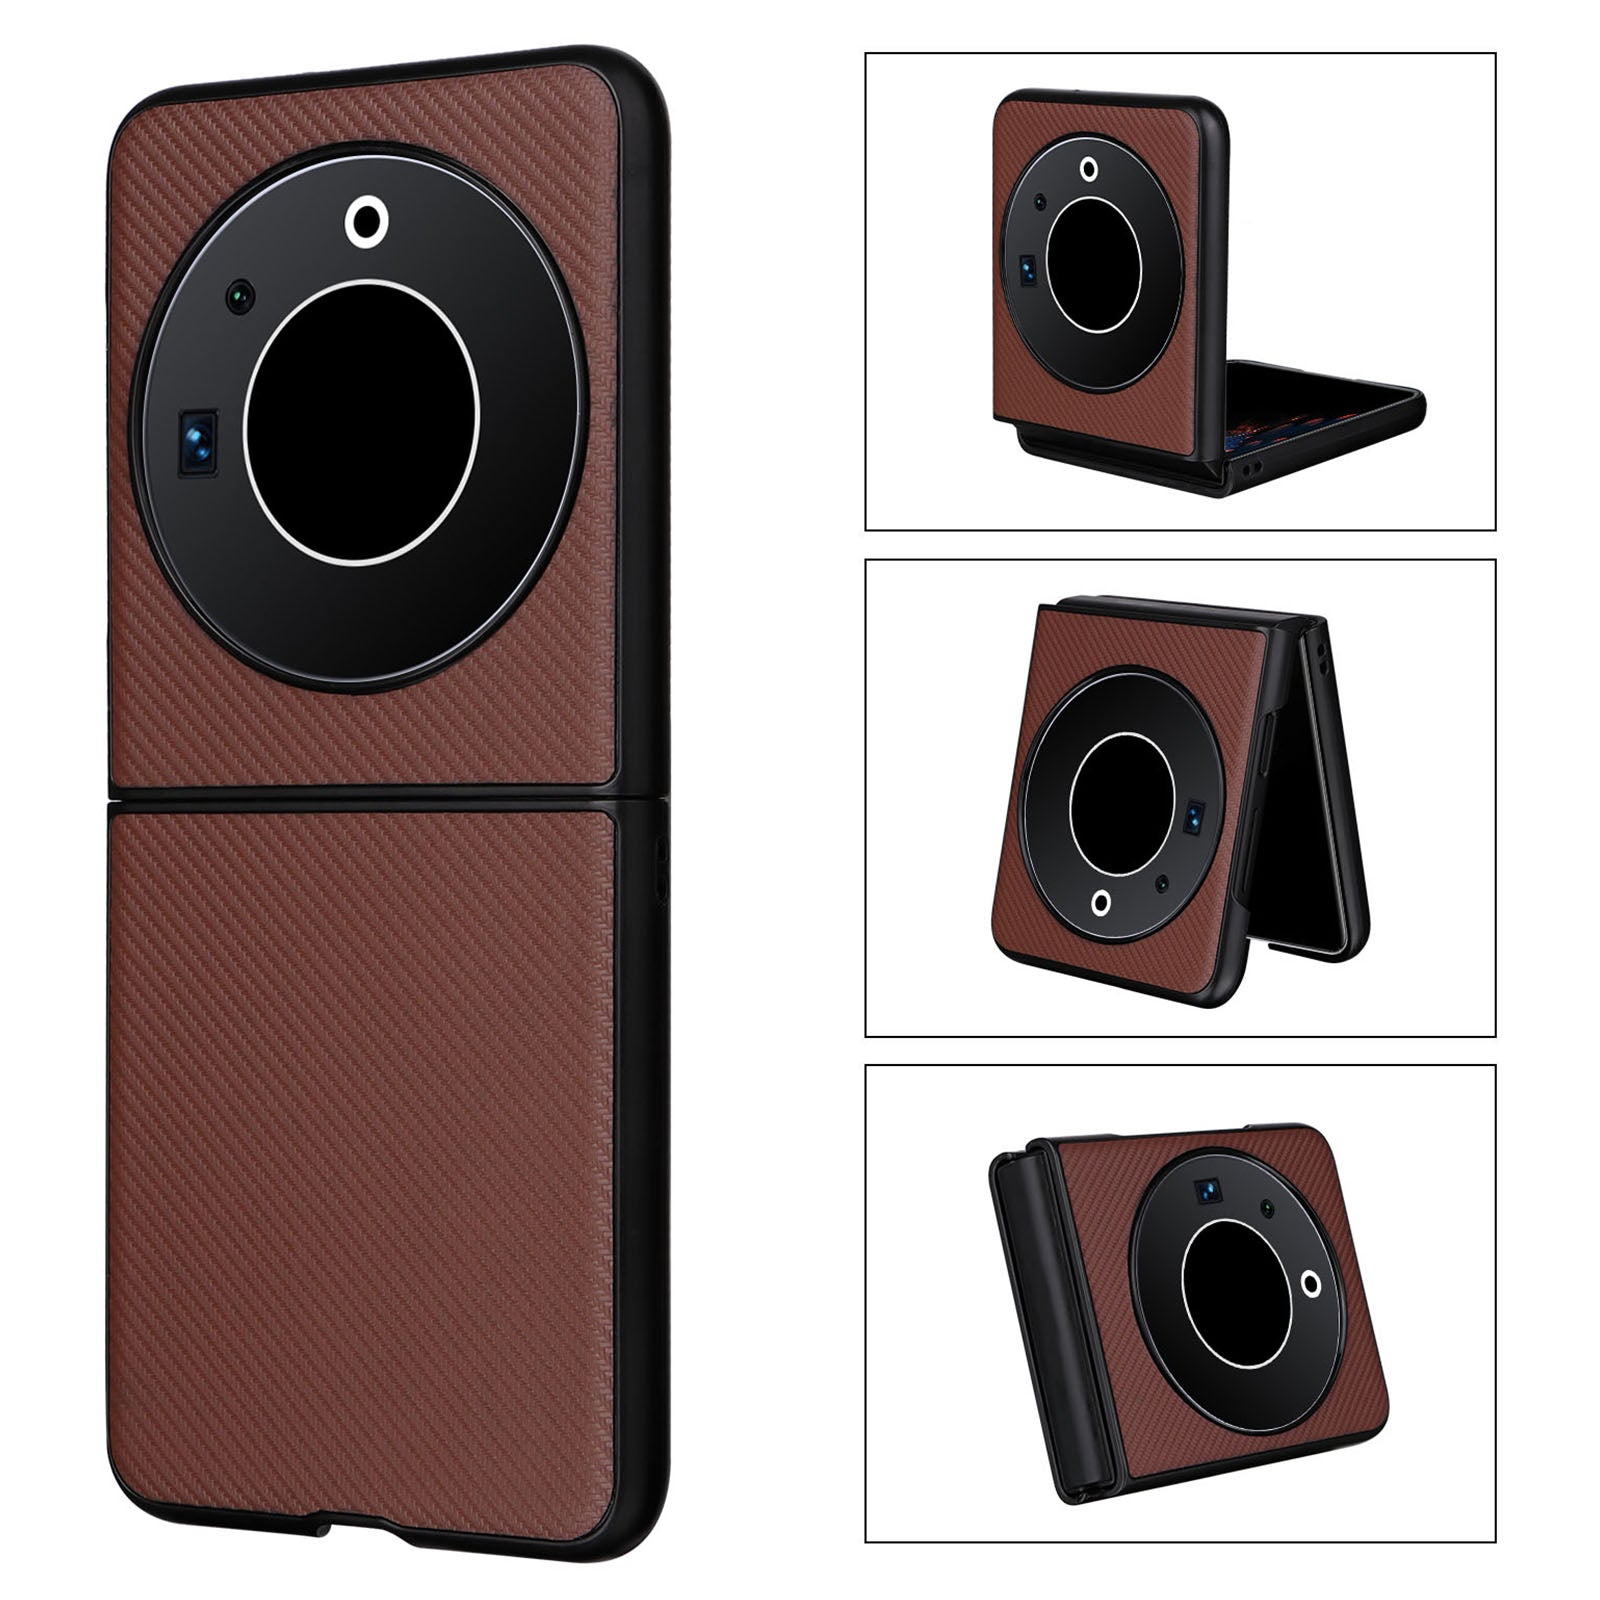 Uniqkart for Tecno Phantom V Flip Carbon Fiber Texture Case PU Leather Coated PC Anti-drop Phone Cover - Brown